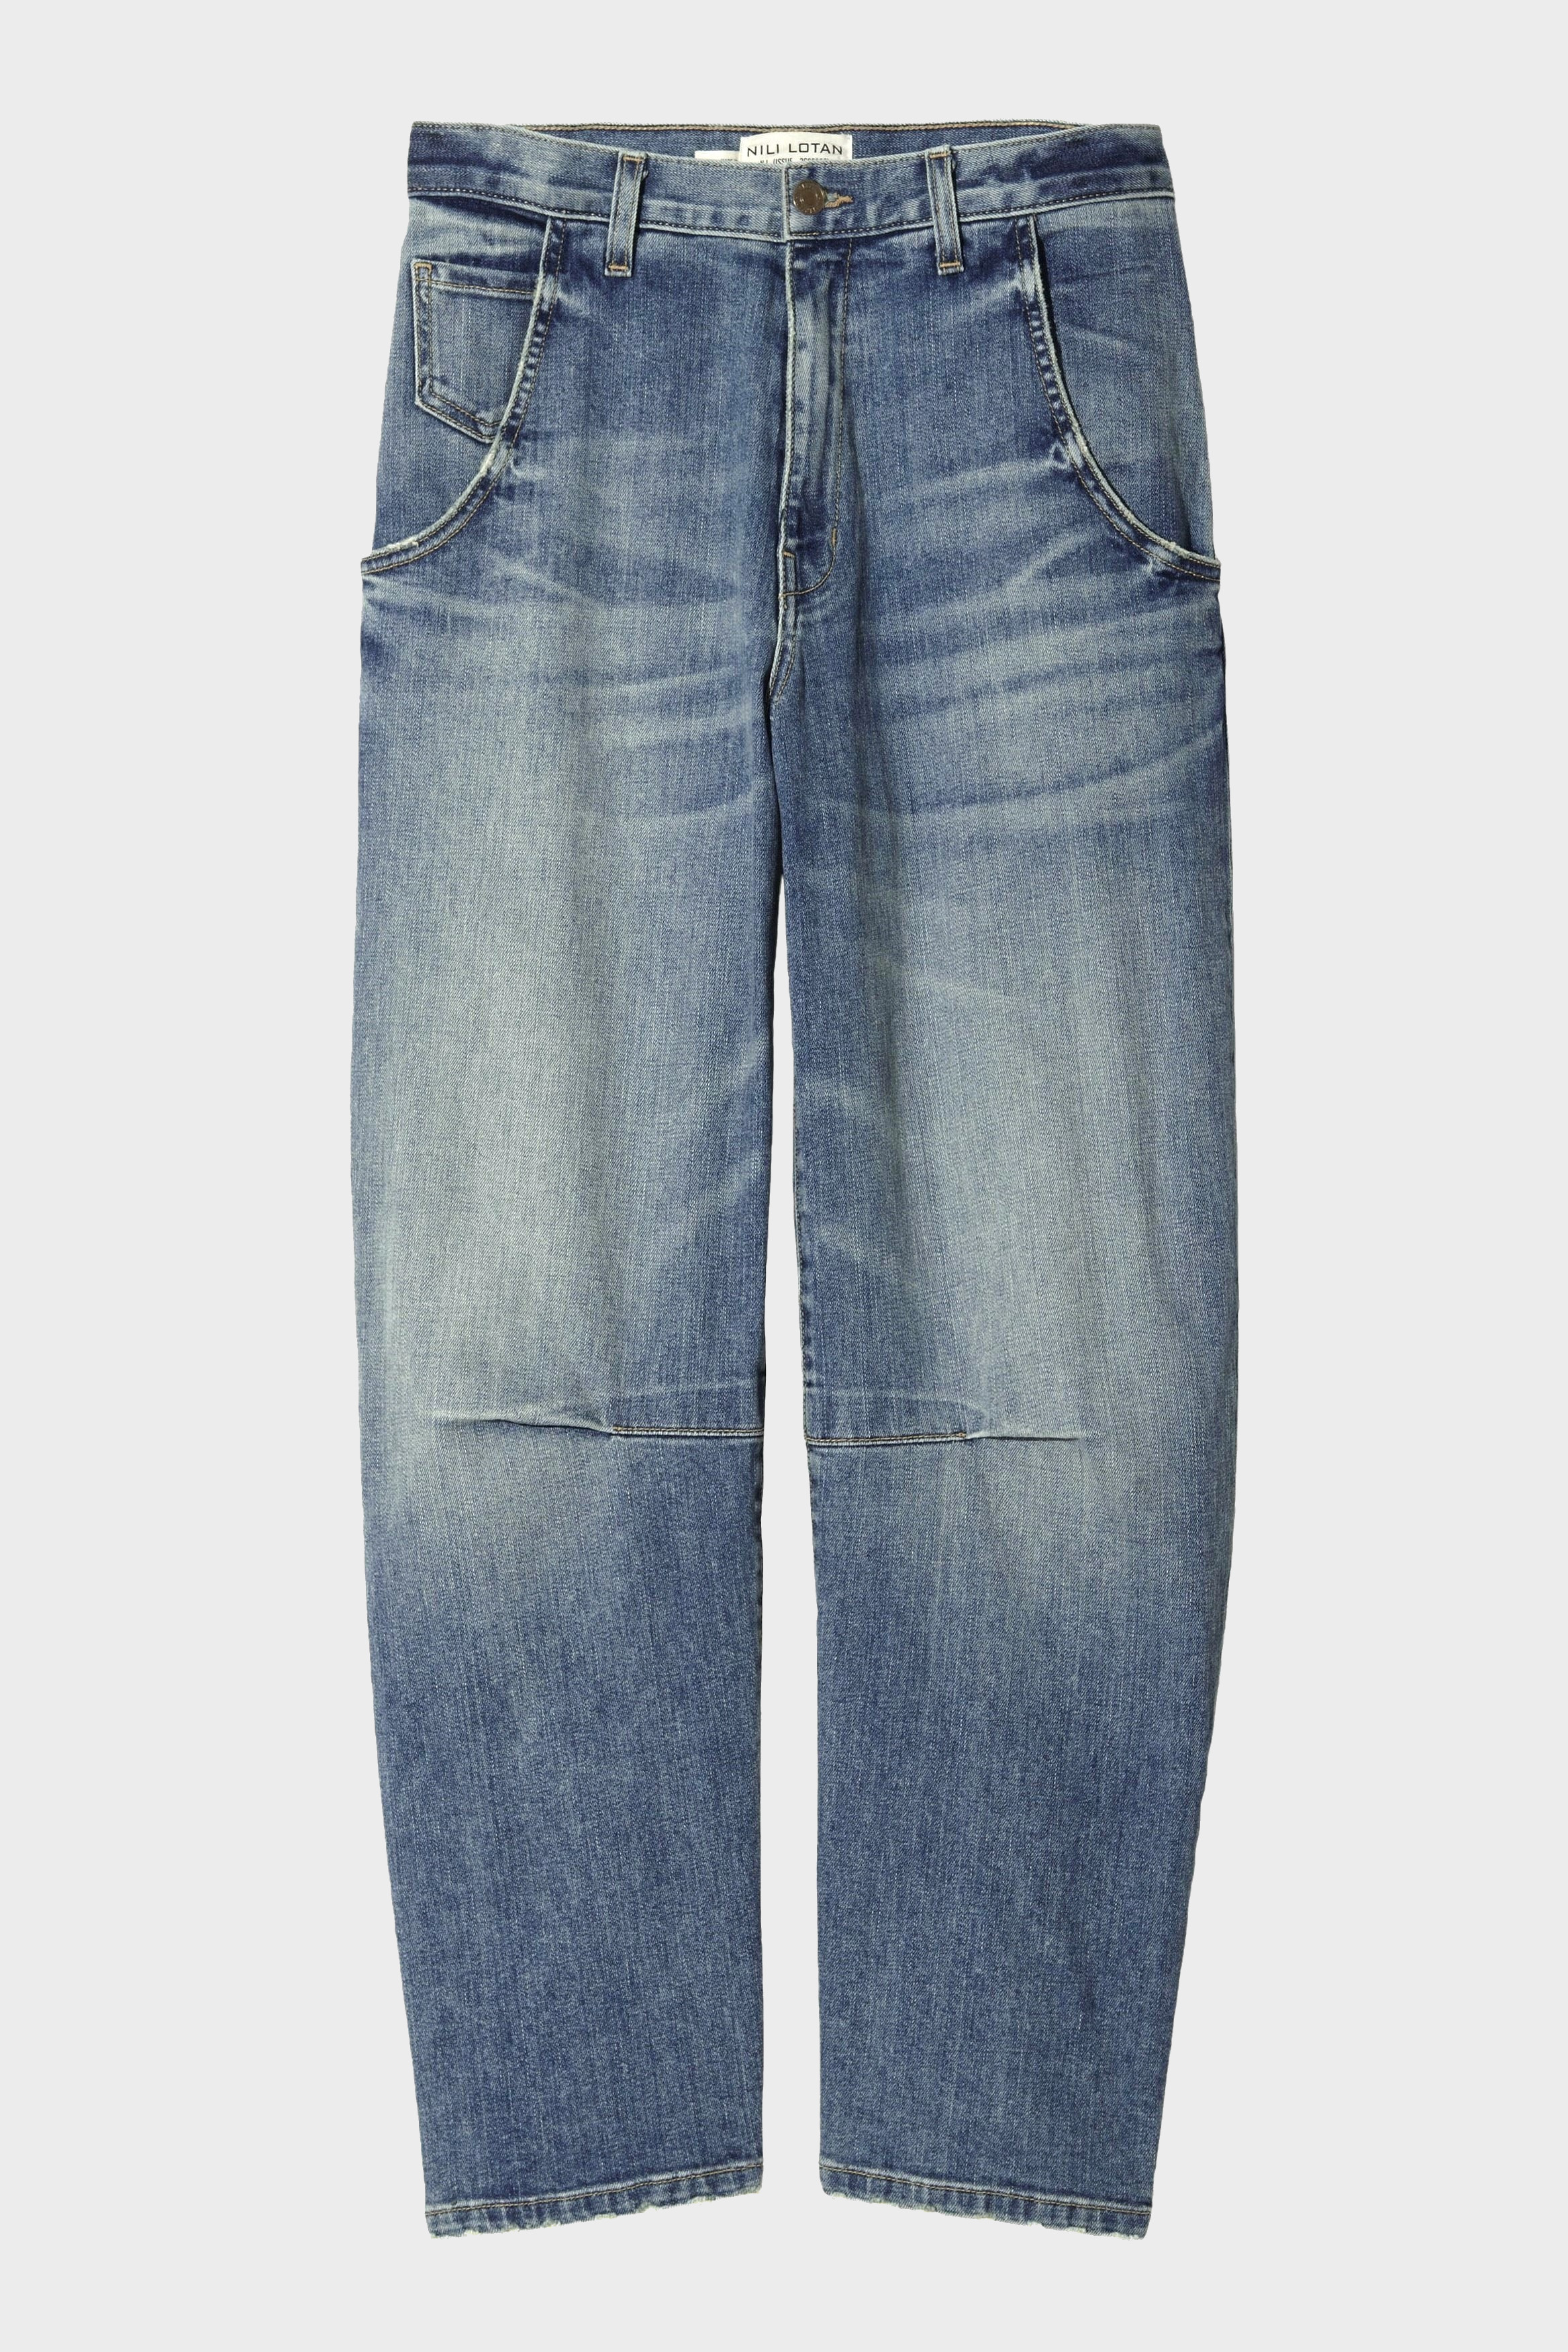 NILI LOTAN Emerson Jeans in Classic Wash